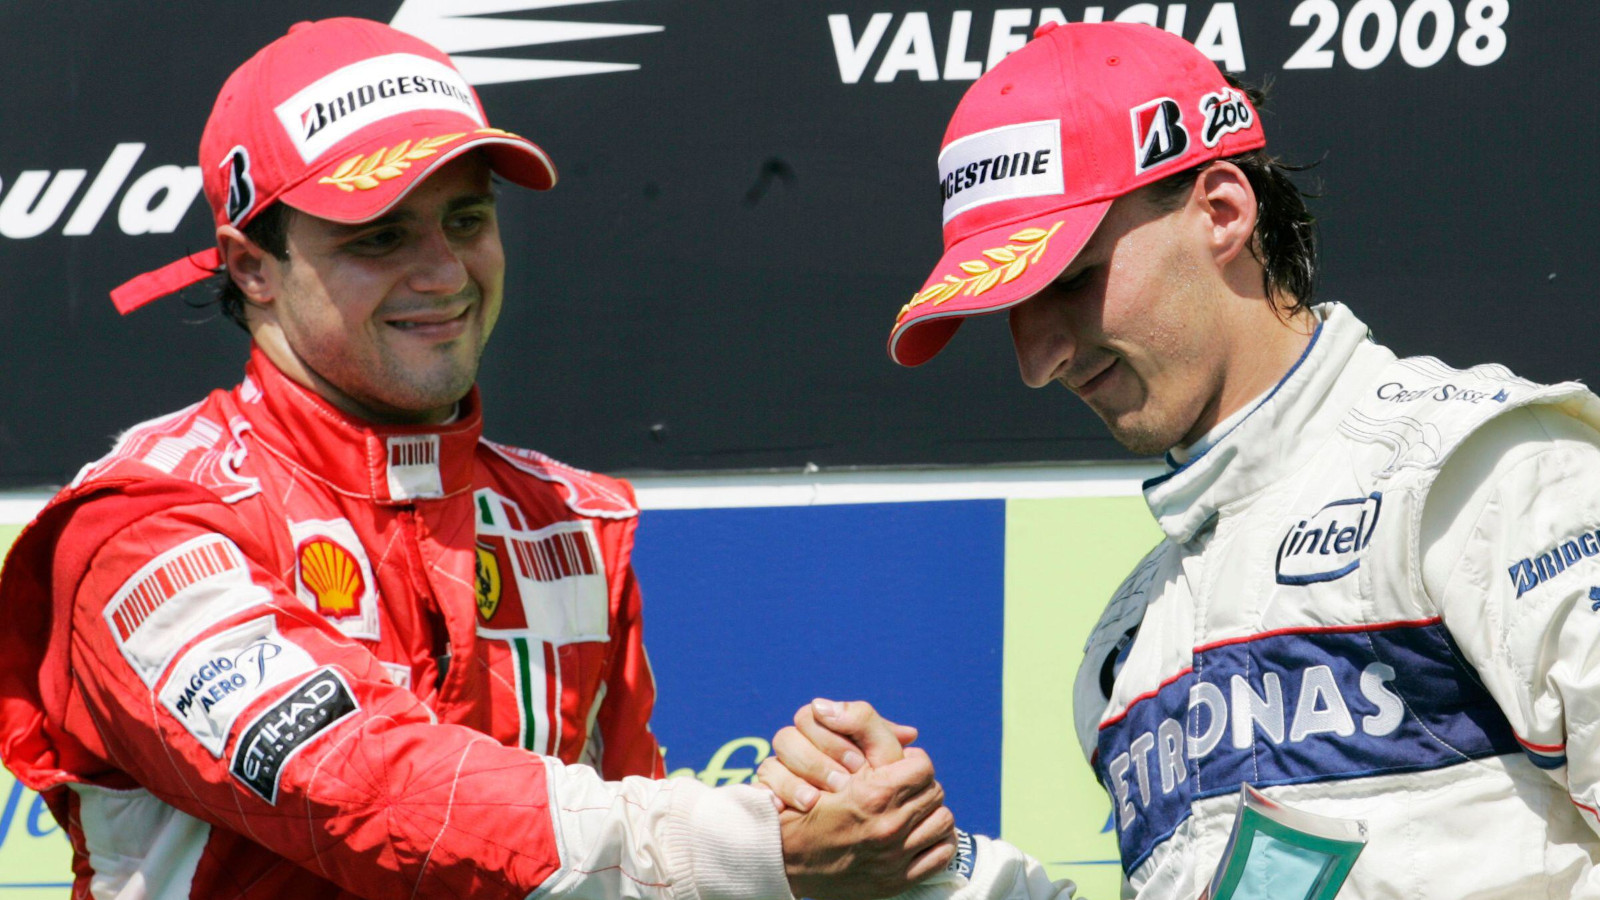 Felipe Massa shakes hands with Robert Kubica. Valencia August 2008